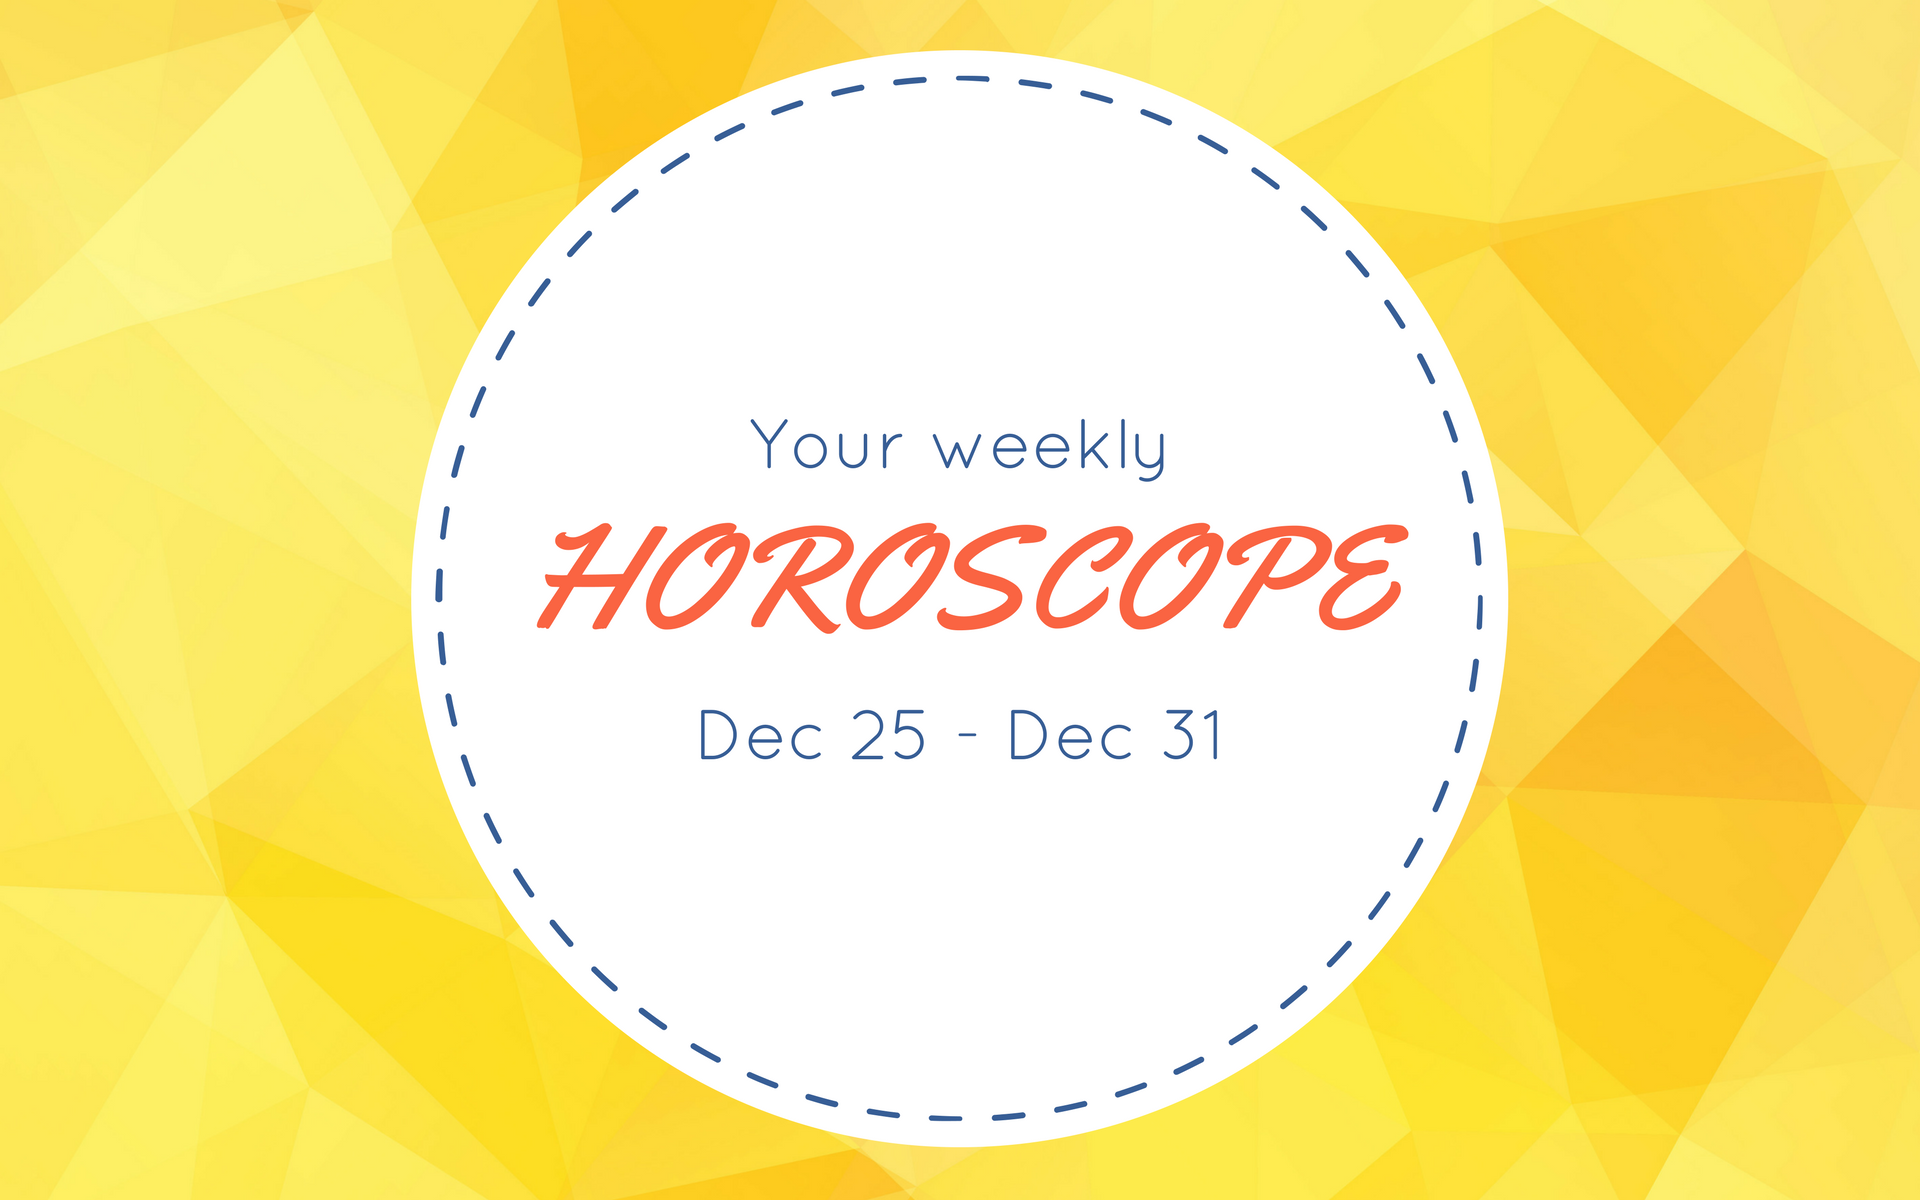 Your Weekly Horoscope: Dec 25 - Dec 31